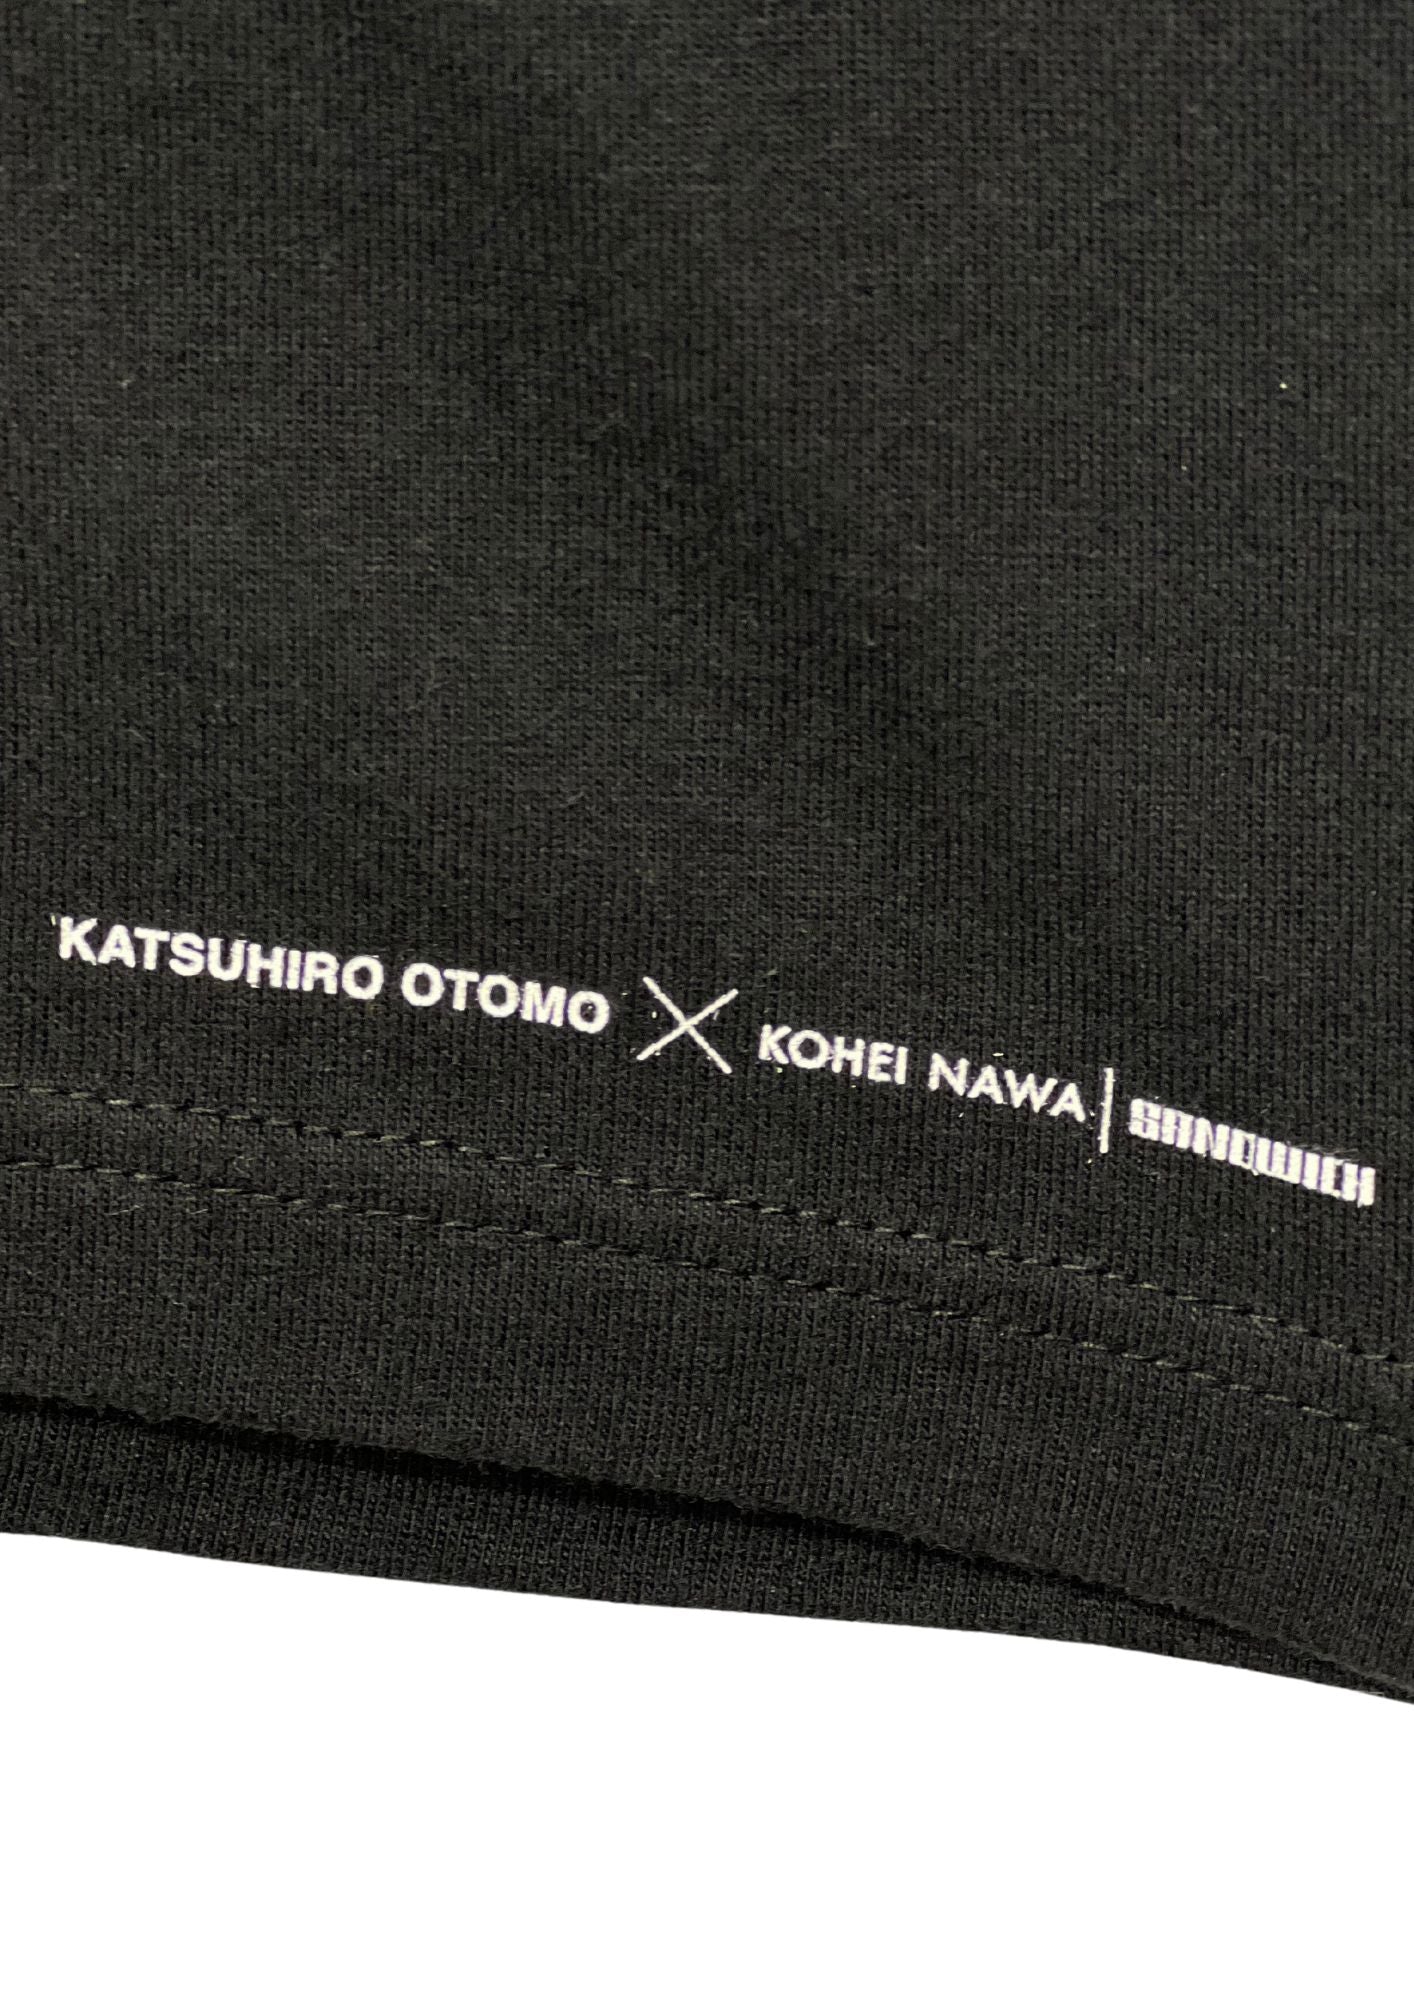 2012 AKIRA x Katsuhiro Otomo x Kohei Nawa Genga Exhibition Limited T-shirt